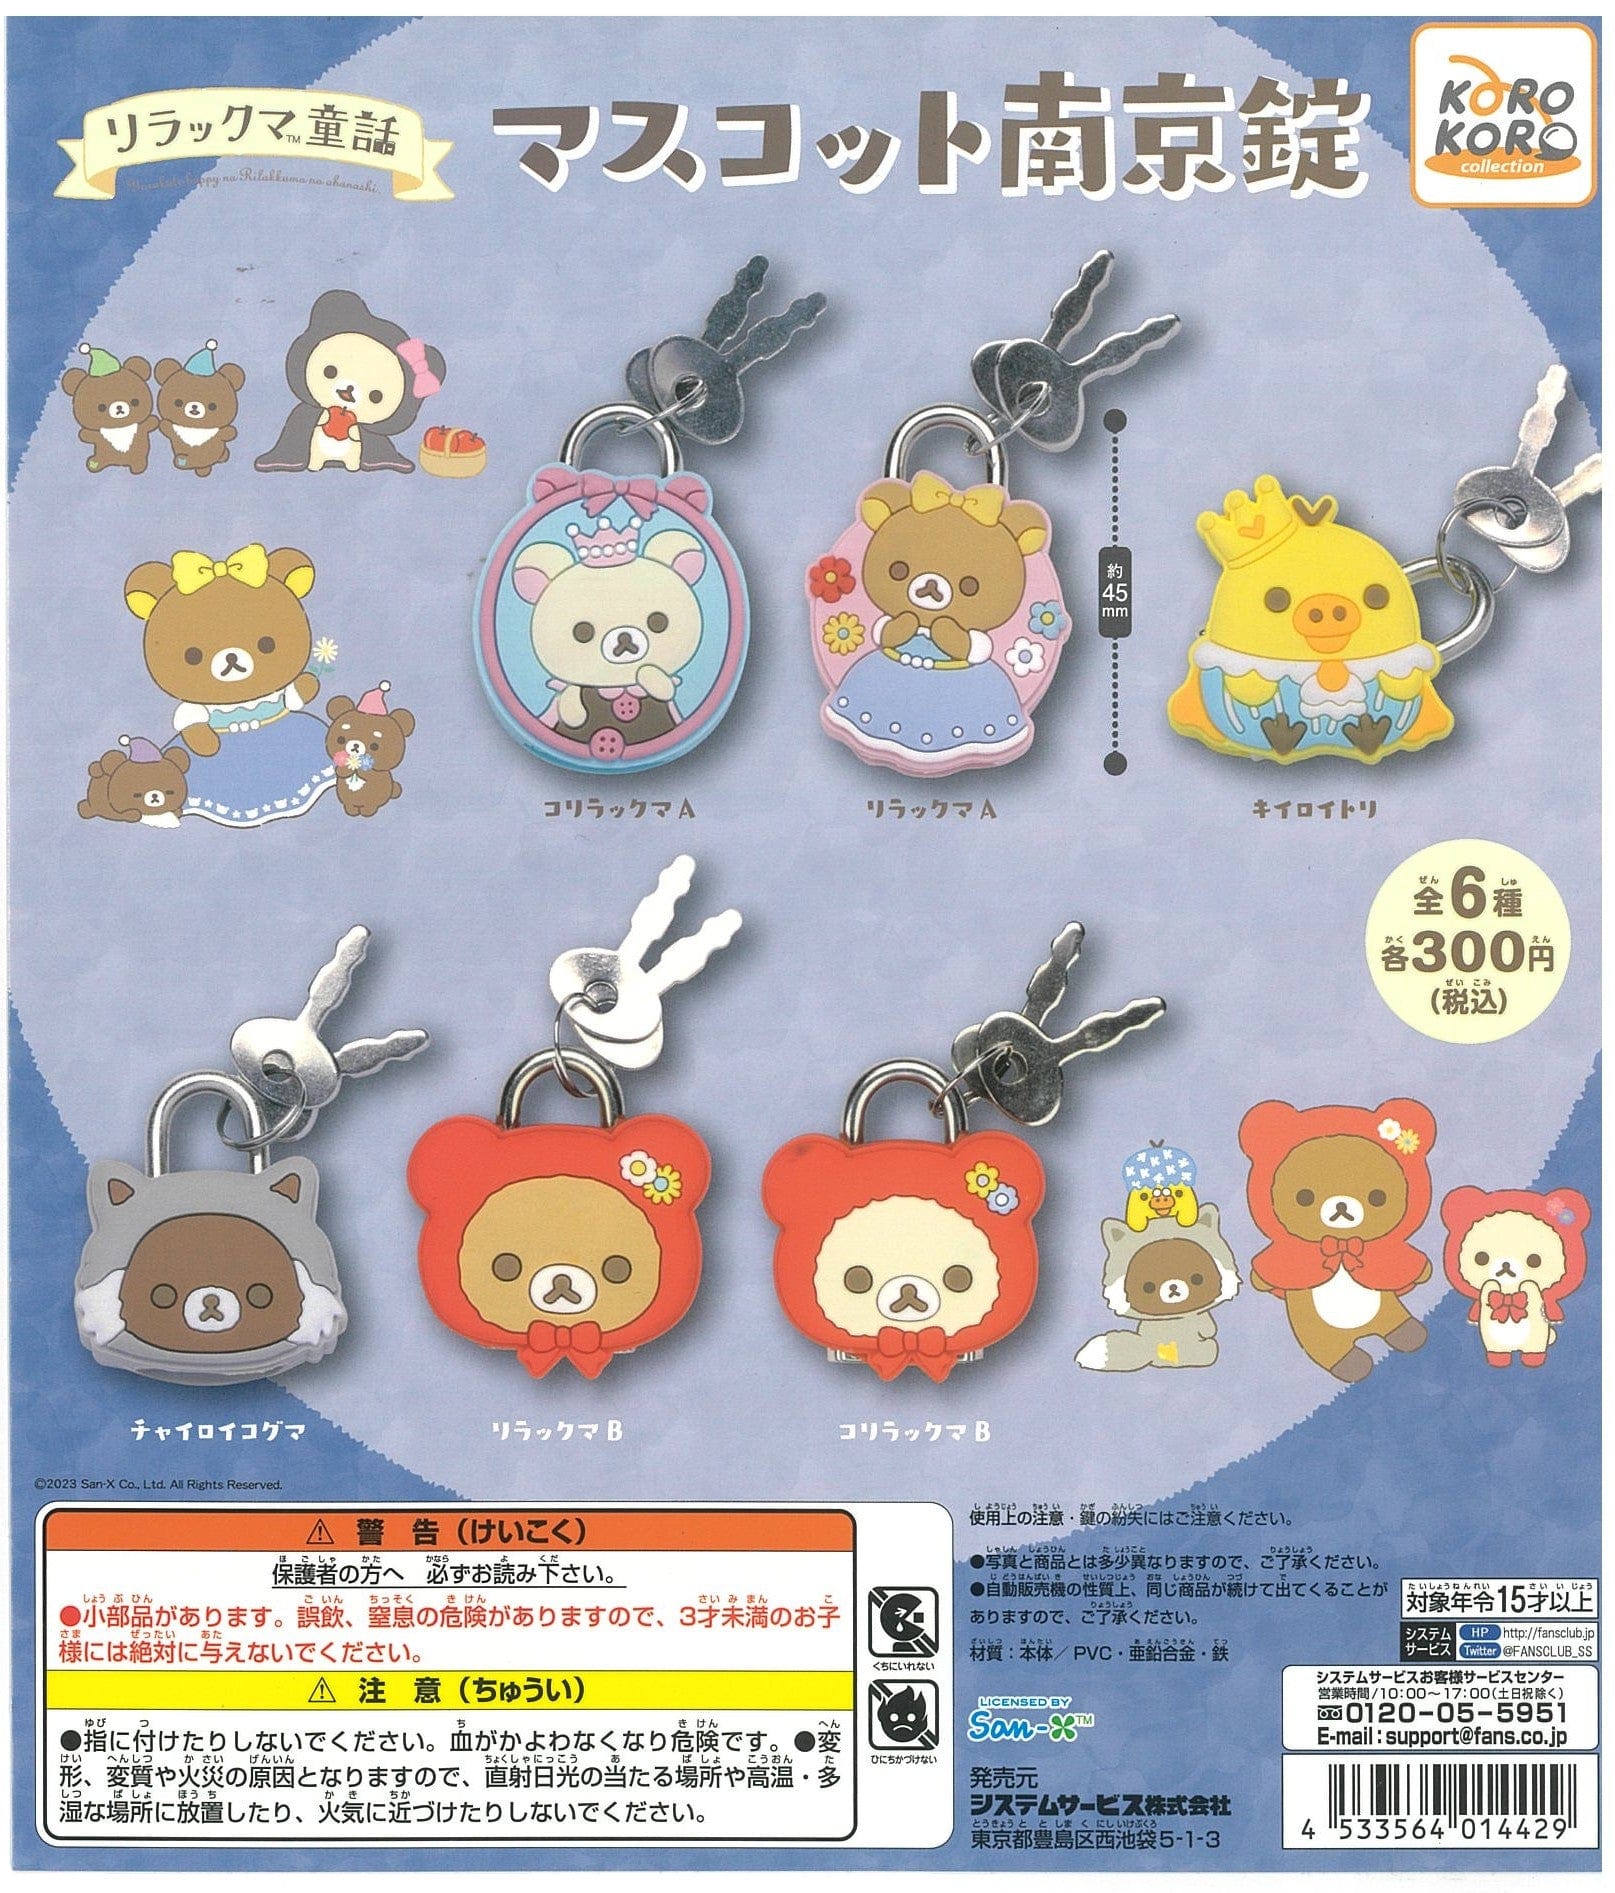 KoroKoro Collection CP2111 Rilakkuma Fairy Tale Mascot Padlock